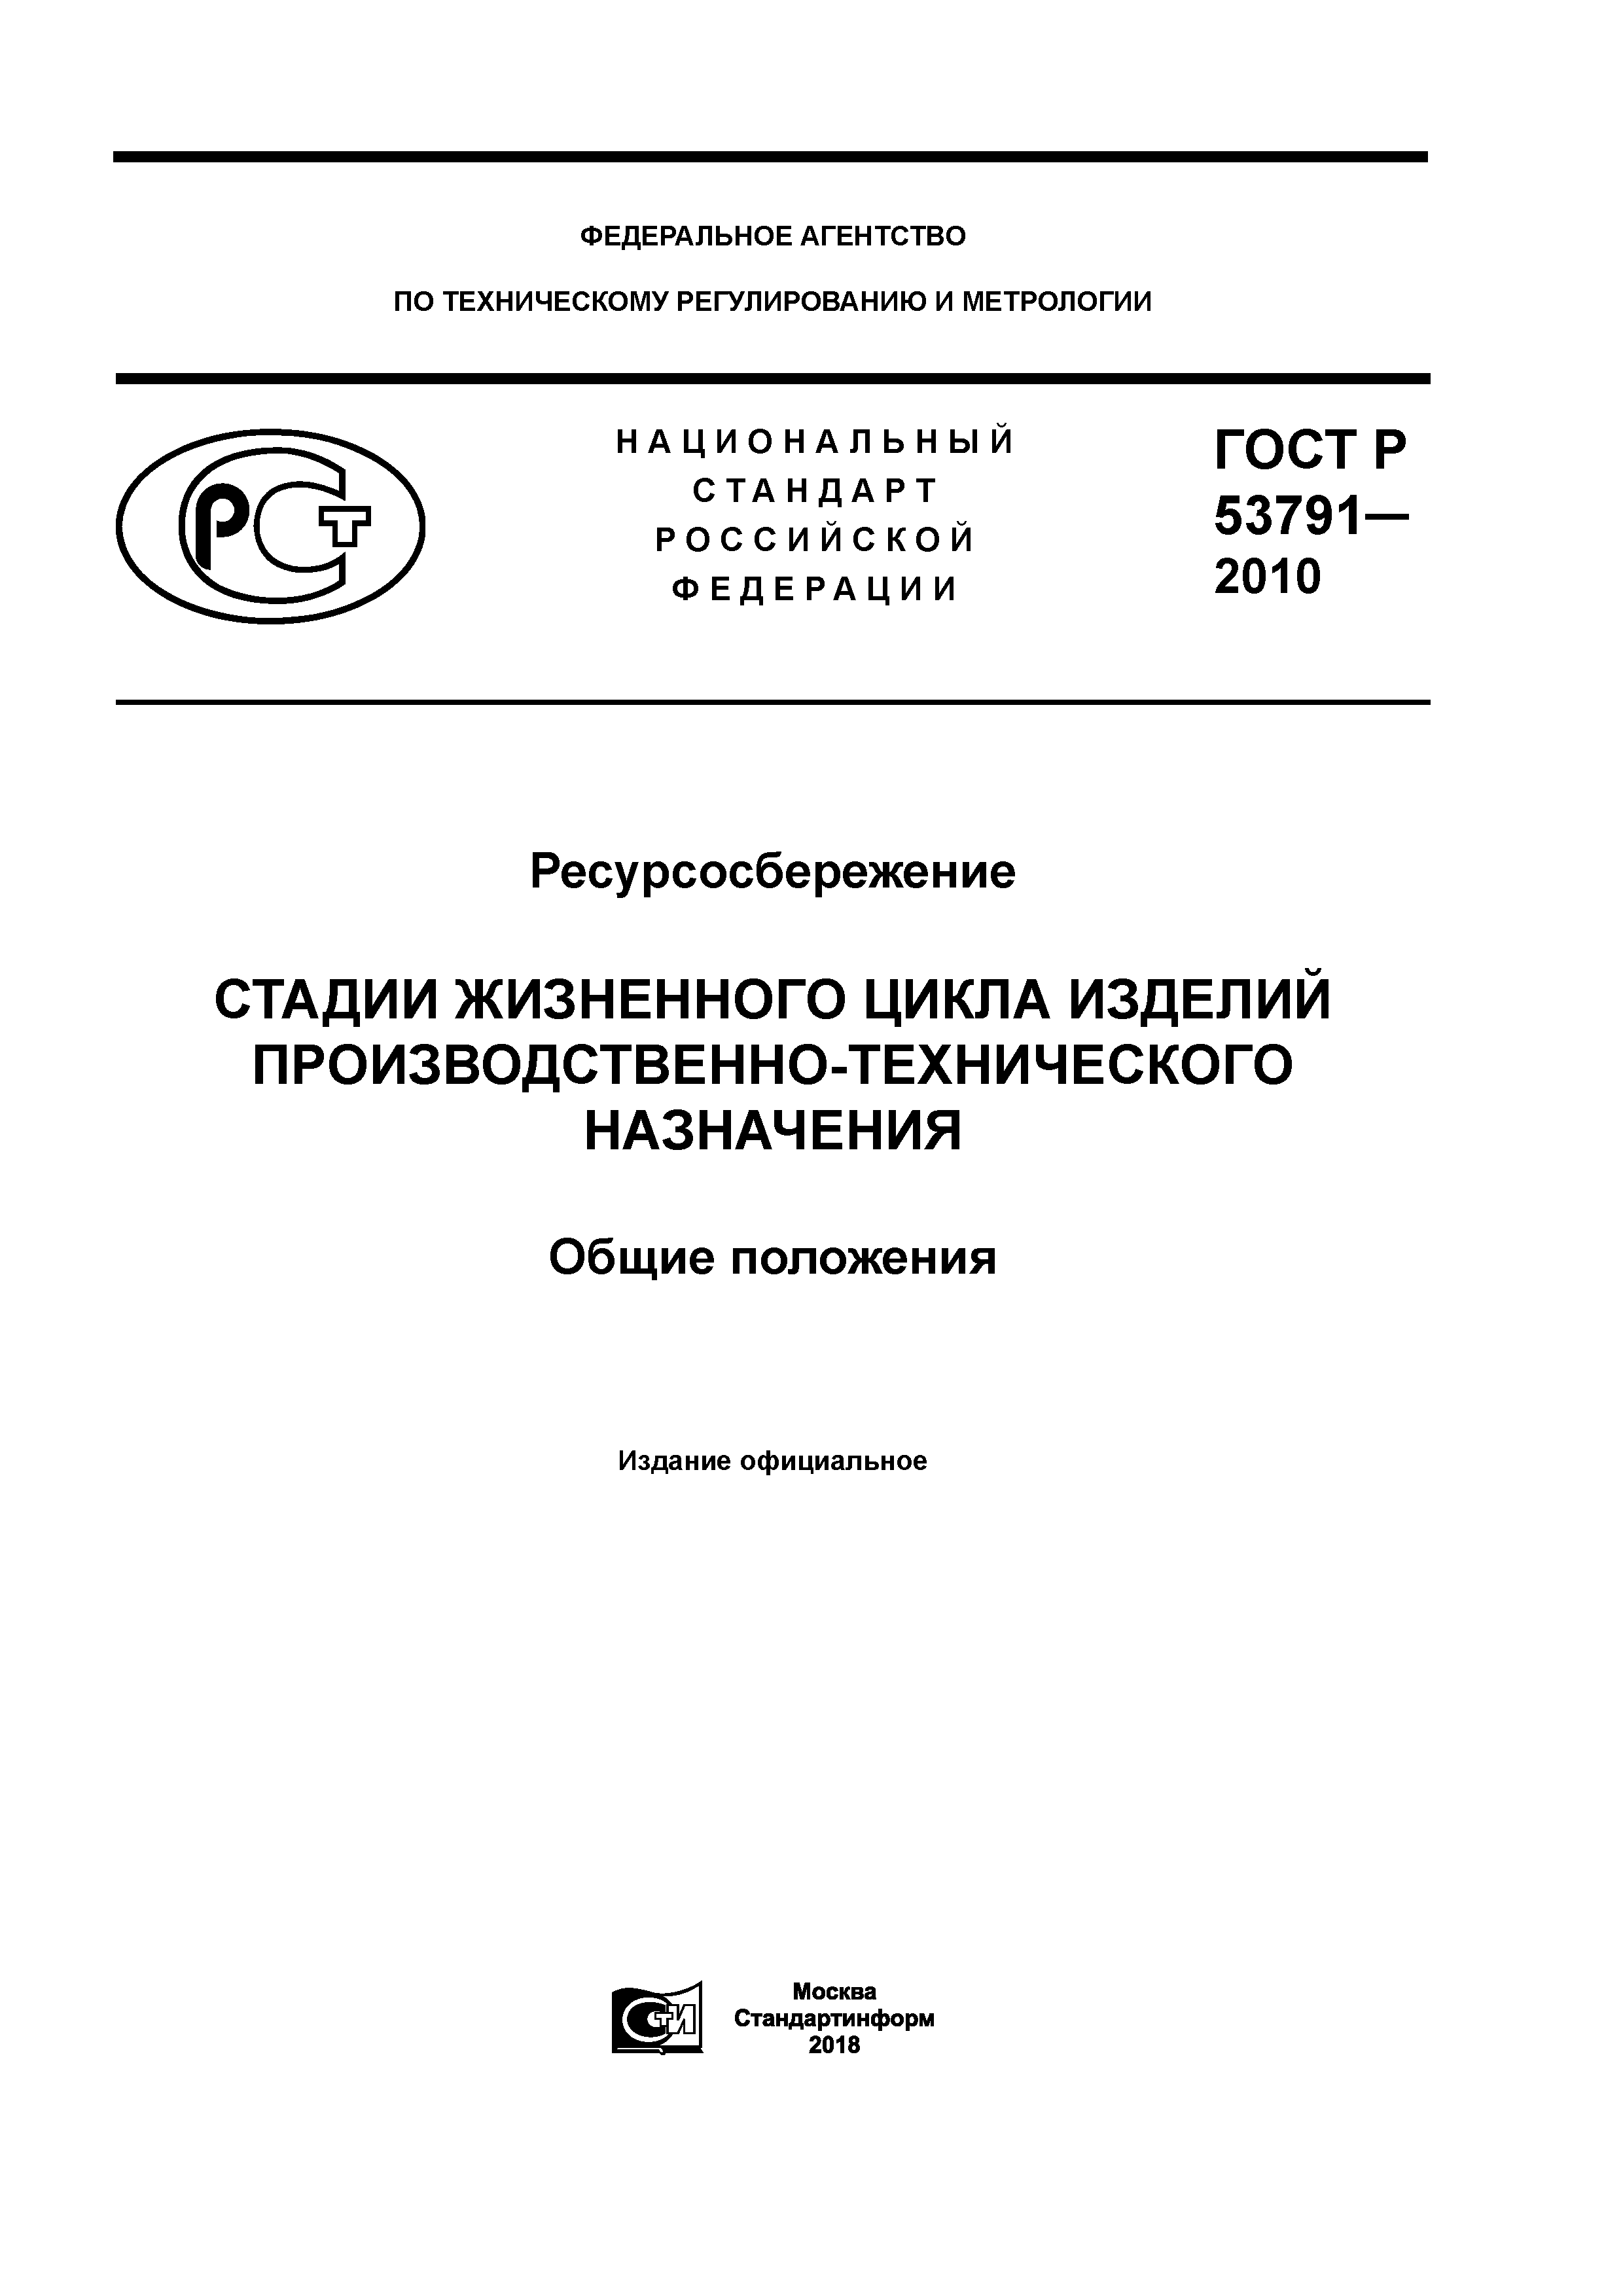 ГОСТ Р 53791-2010